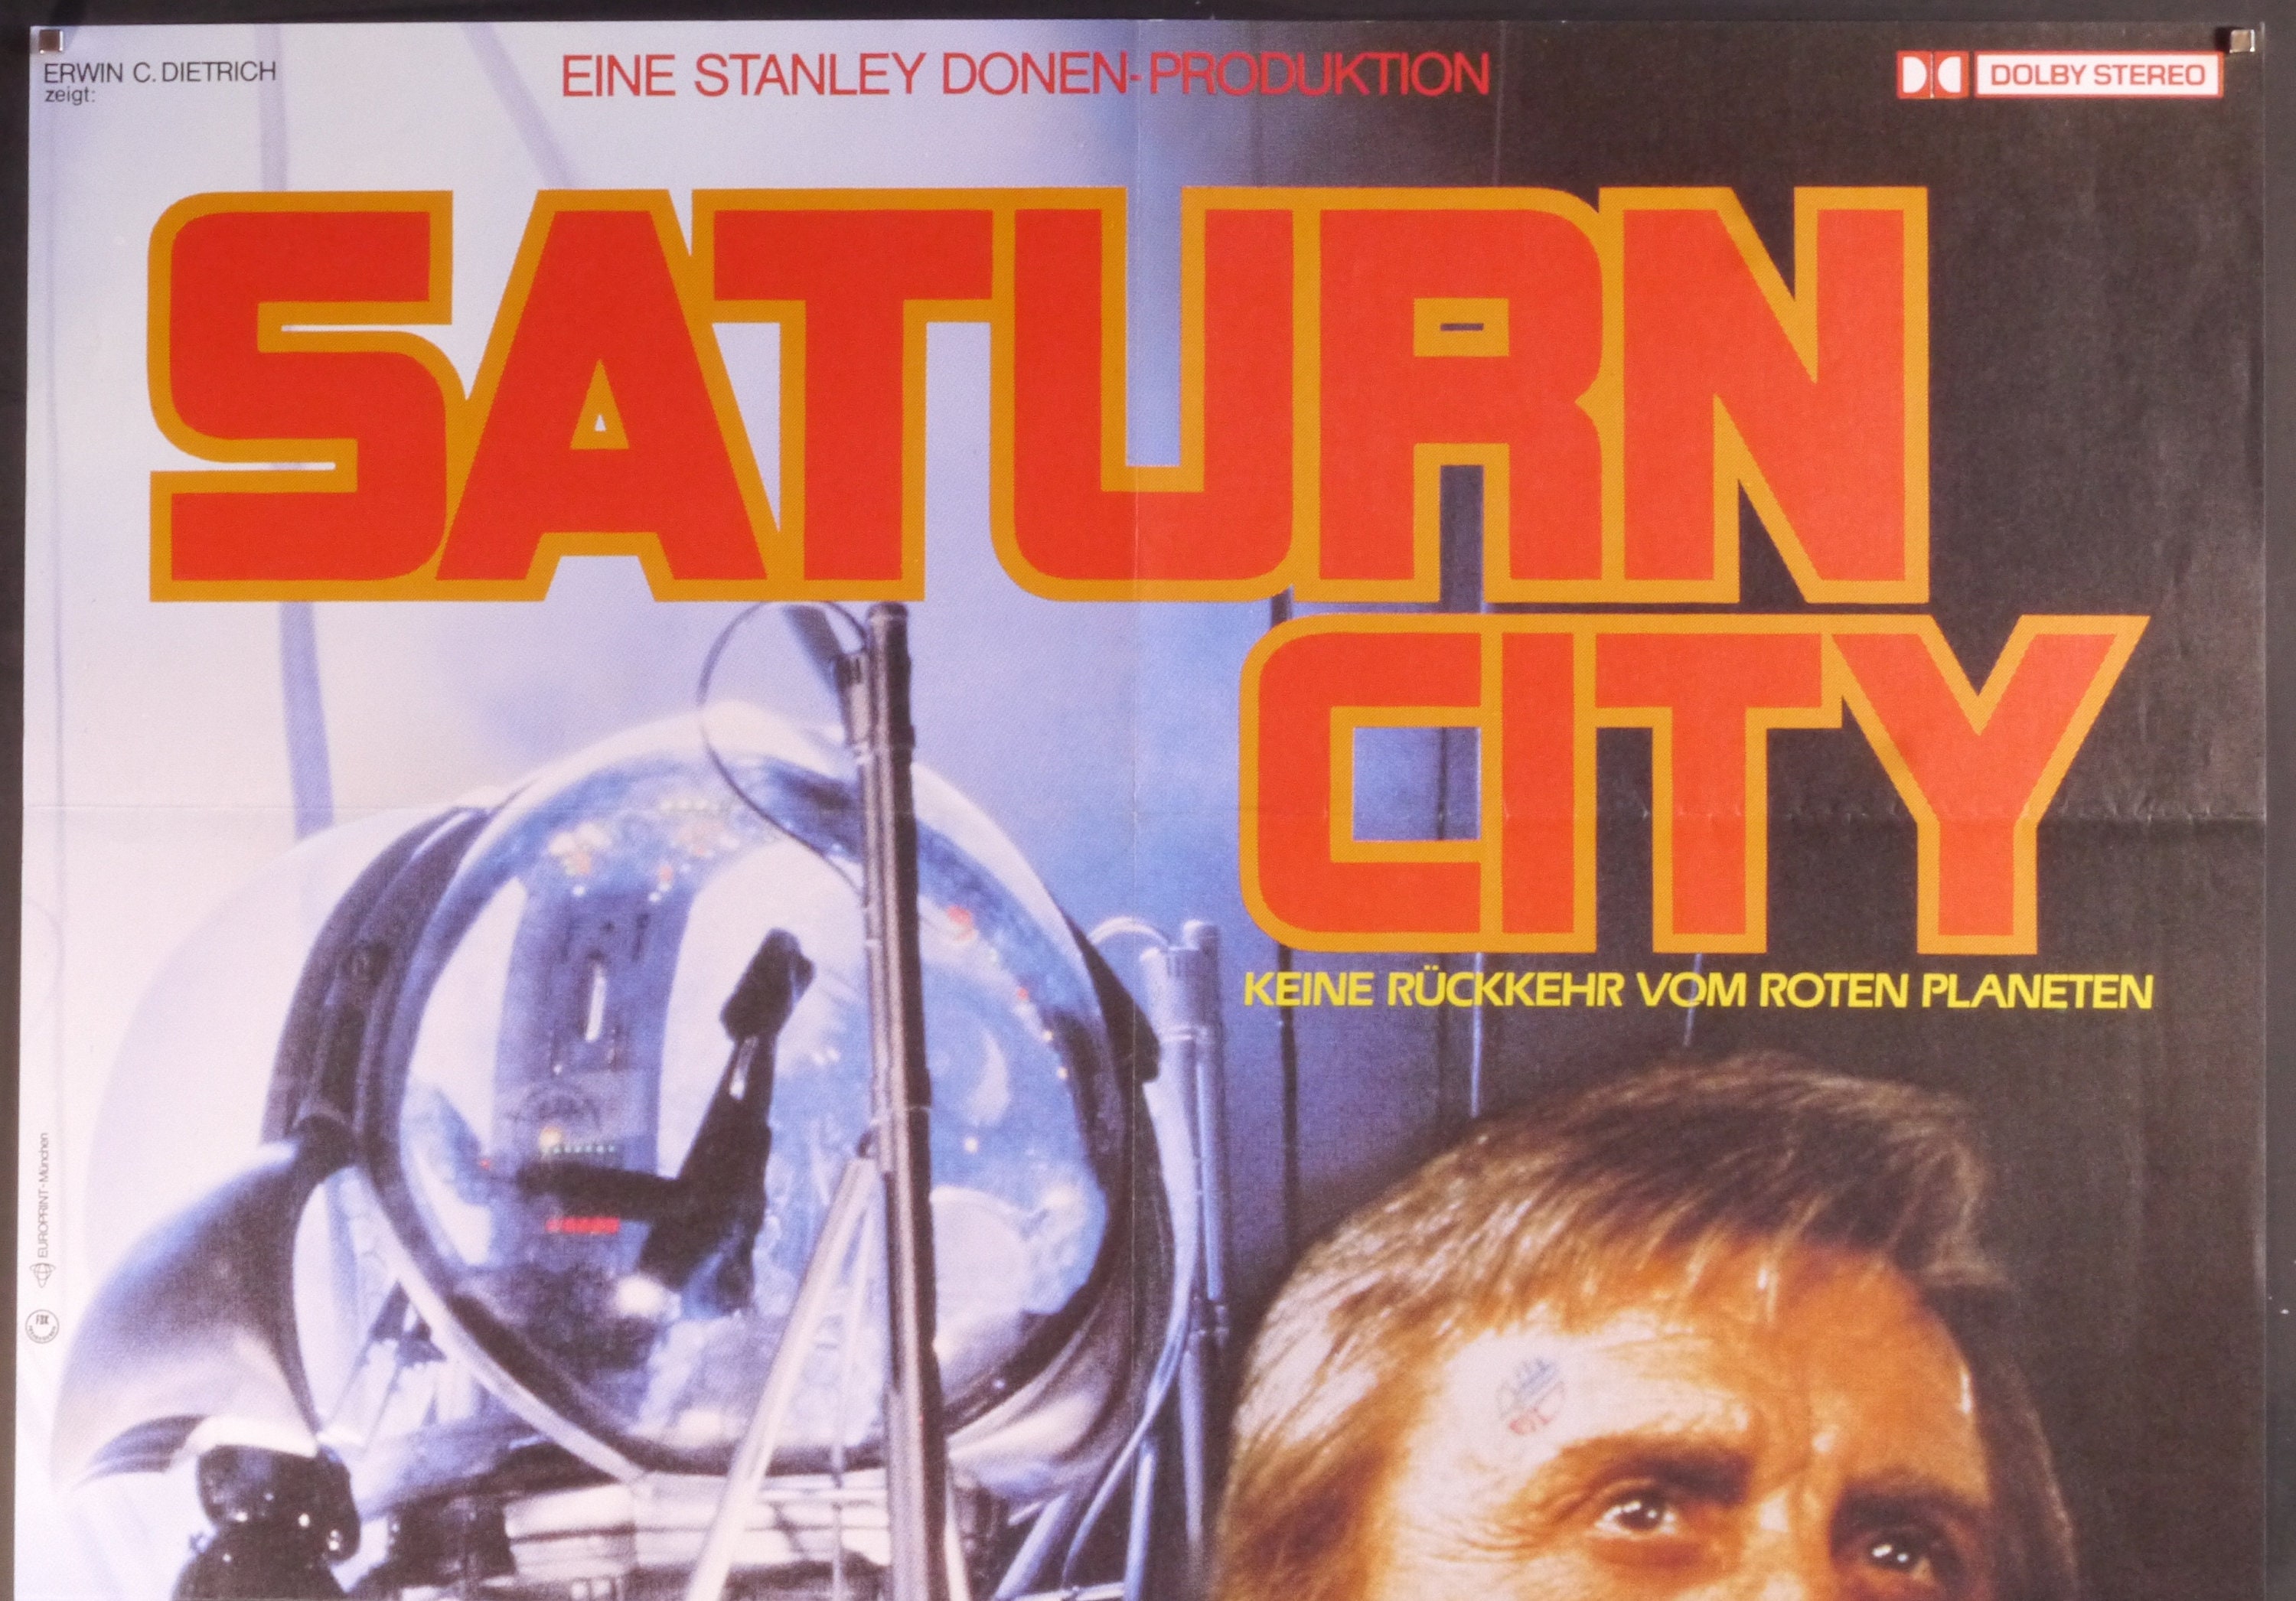 Saturn 3 - Stanley Donen, John Barry (1980) - Zoom SciFi-Movies